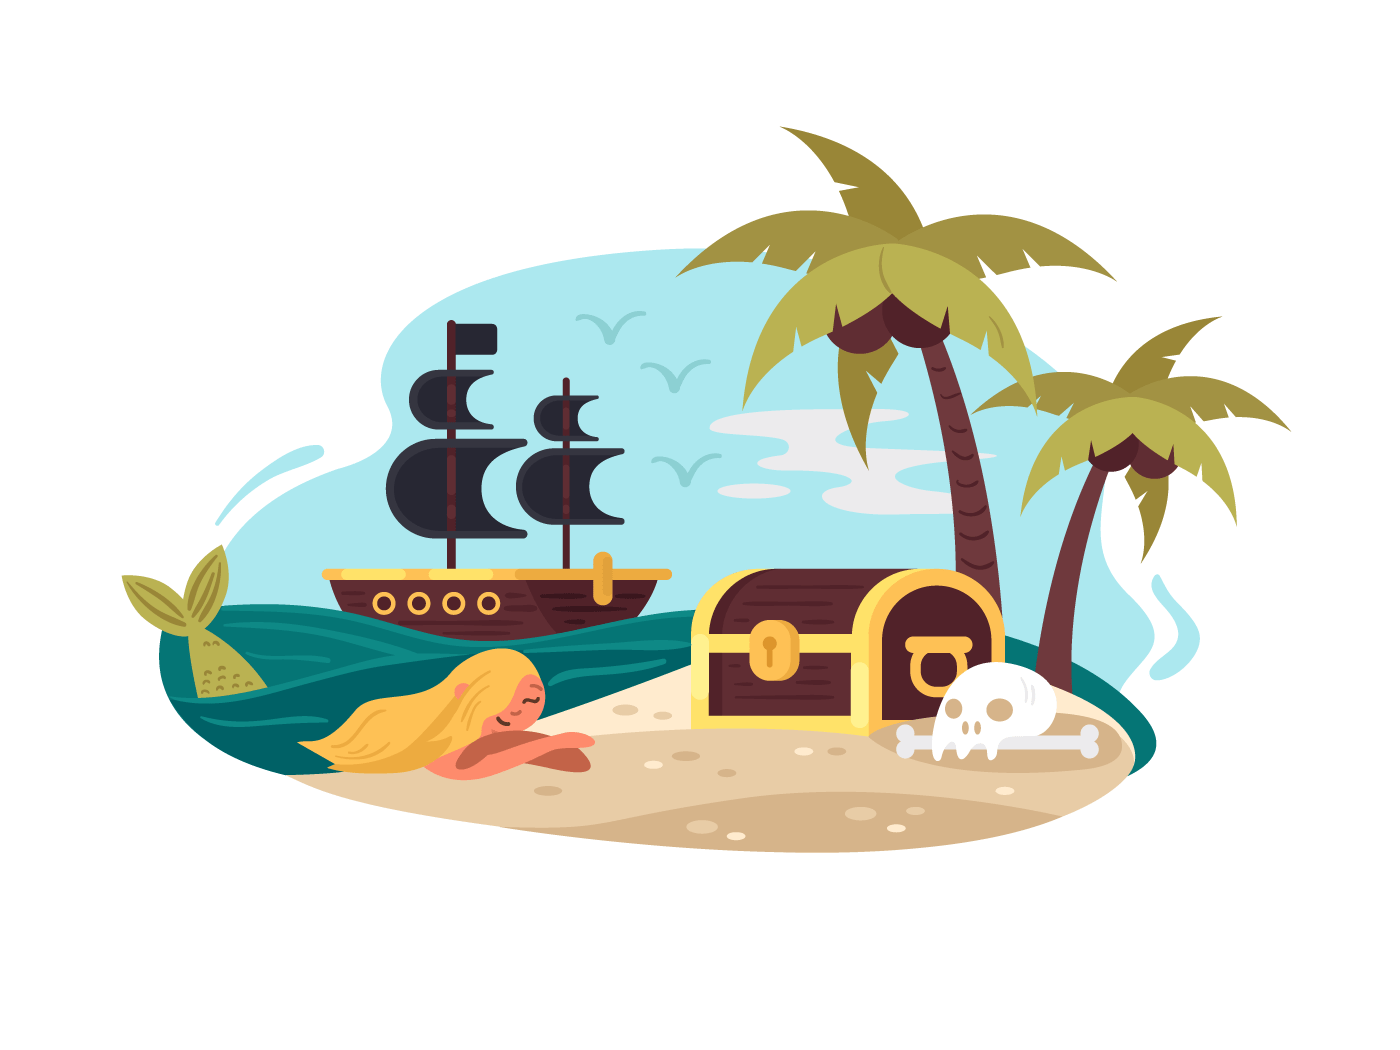 Pirate uninhabited island illustration